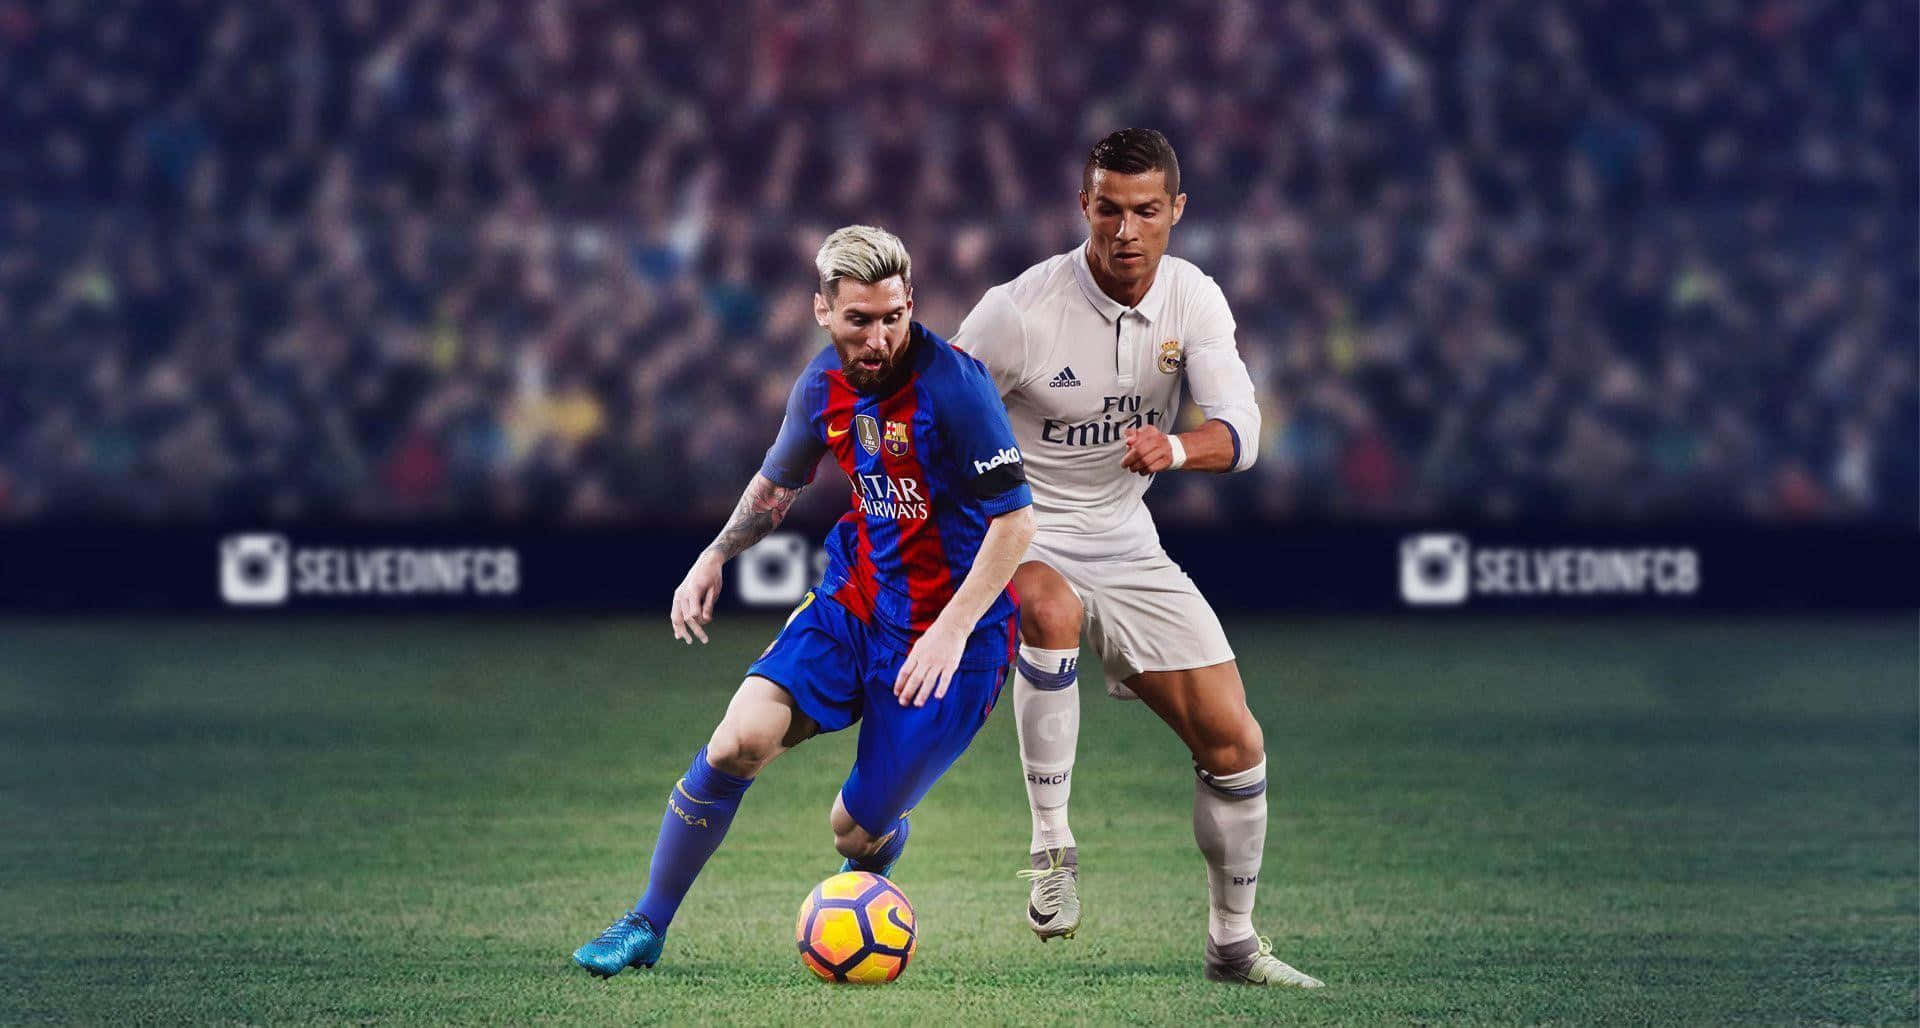 Download Ronaldovs Messi Football Rivalry Wallpaper | Wallpapers.com